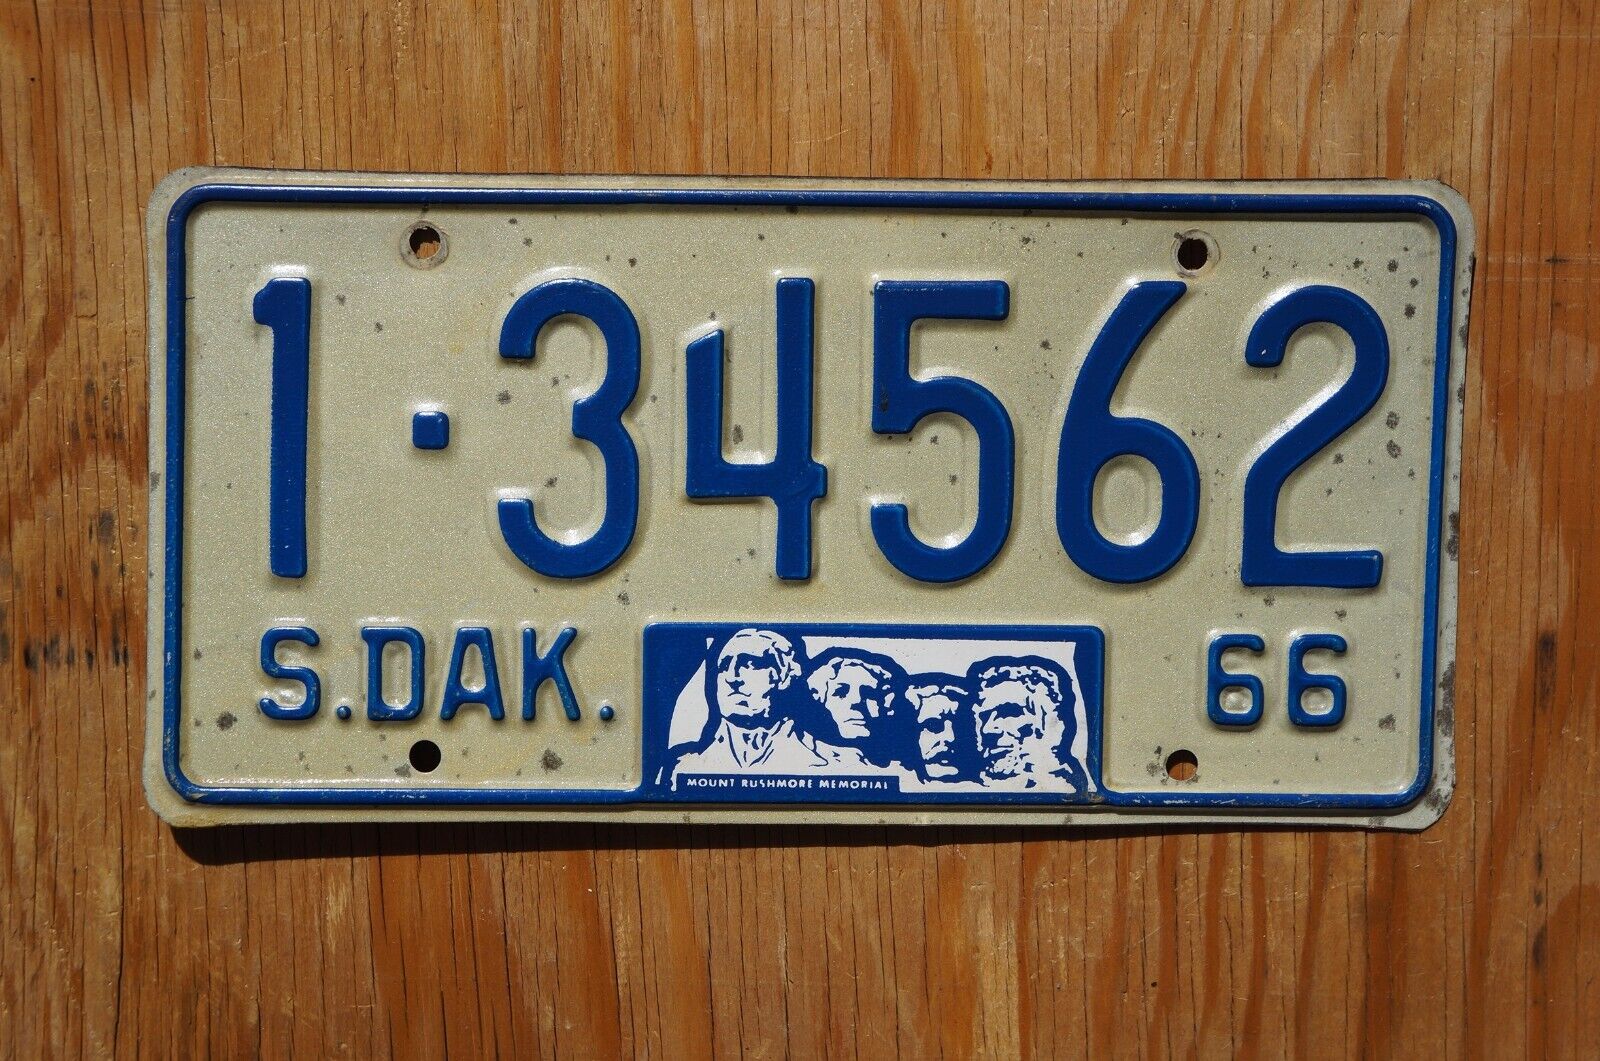 1966 South Dakota MT RUSHMORE License Plate